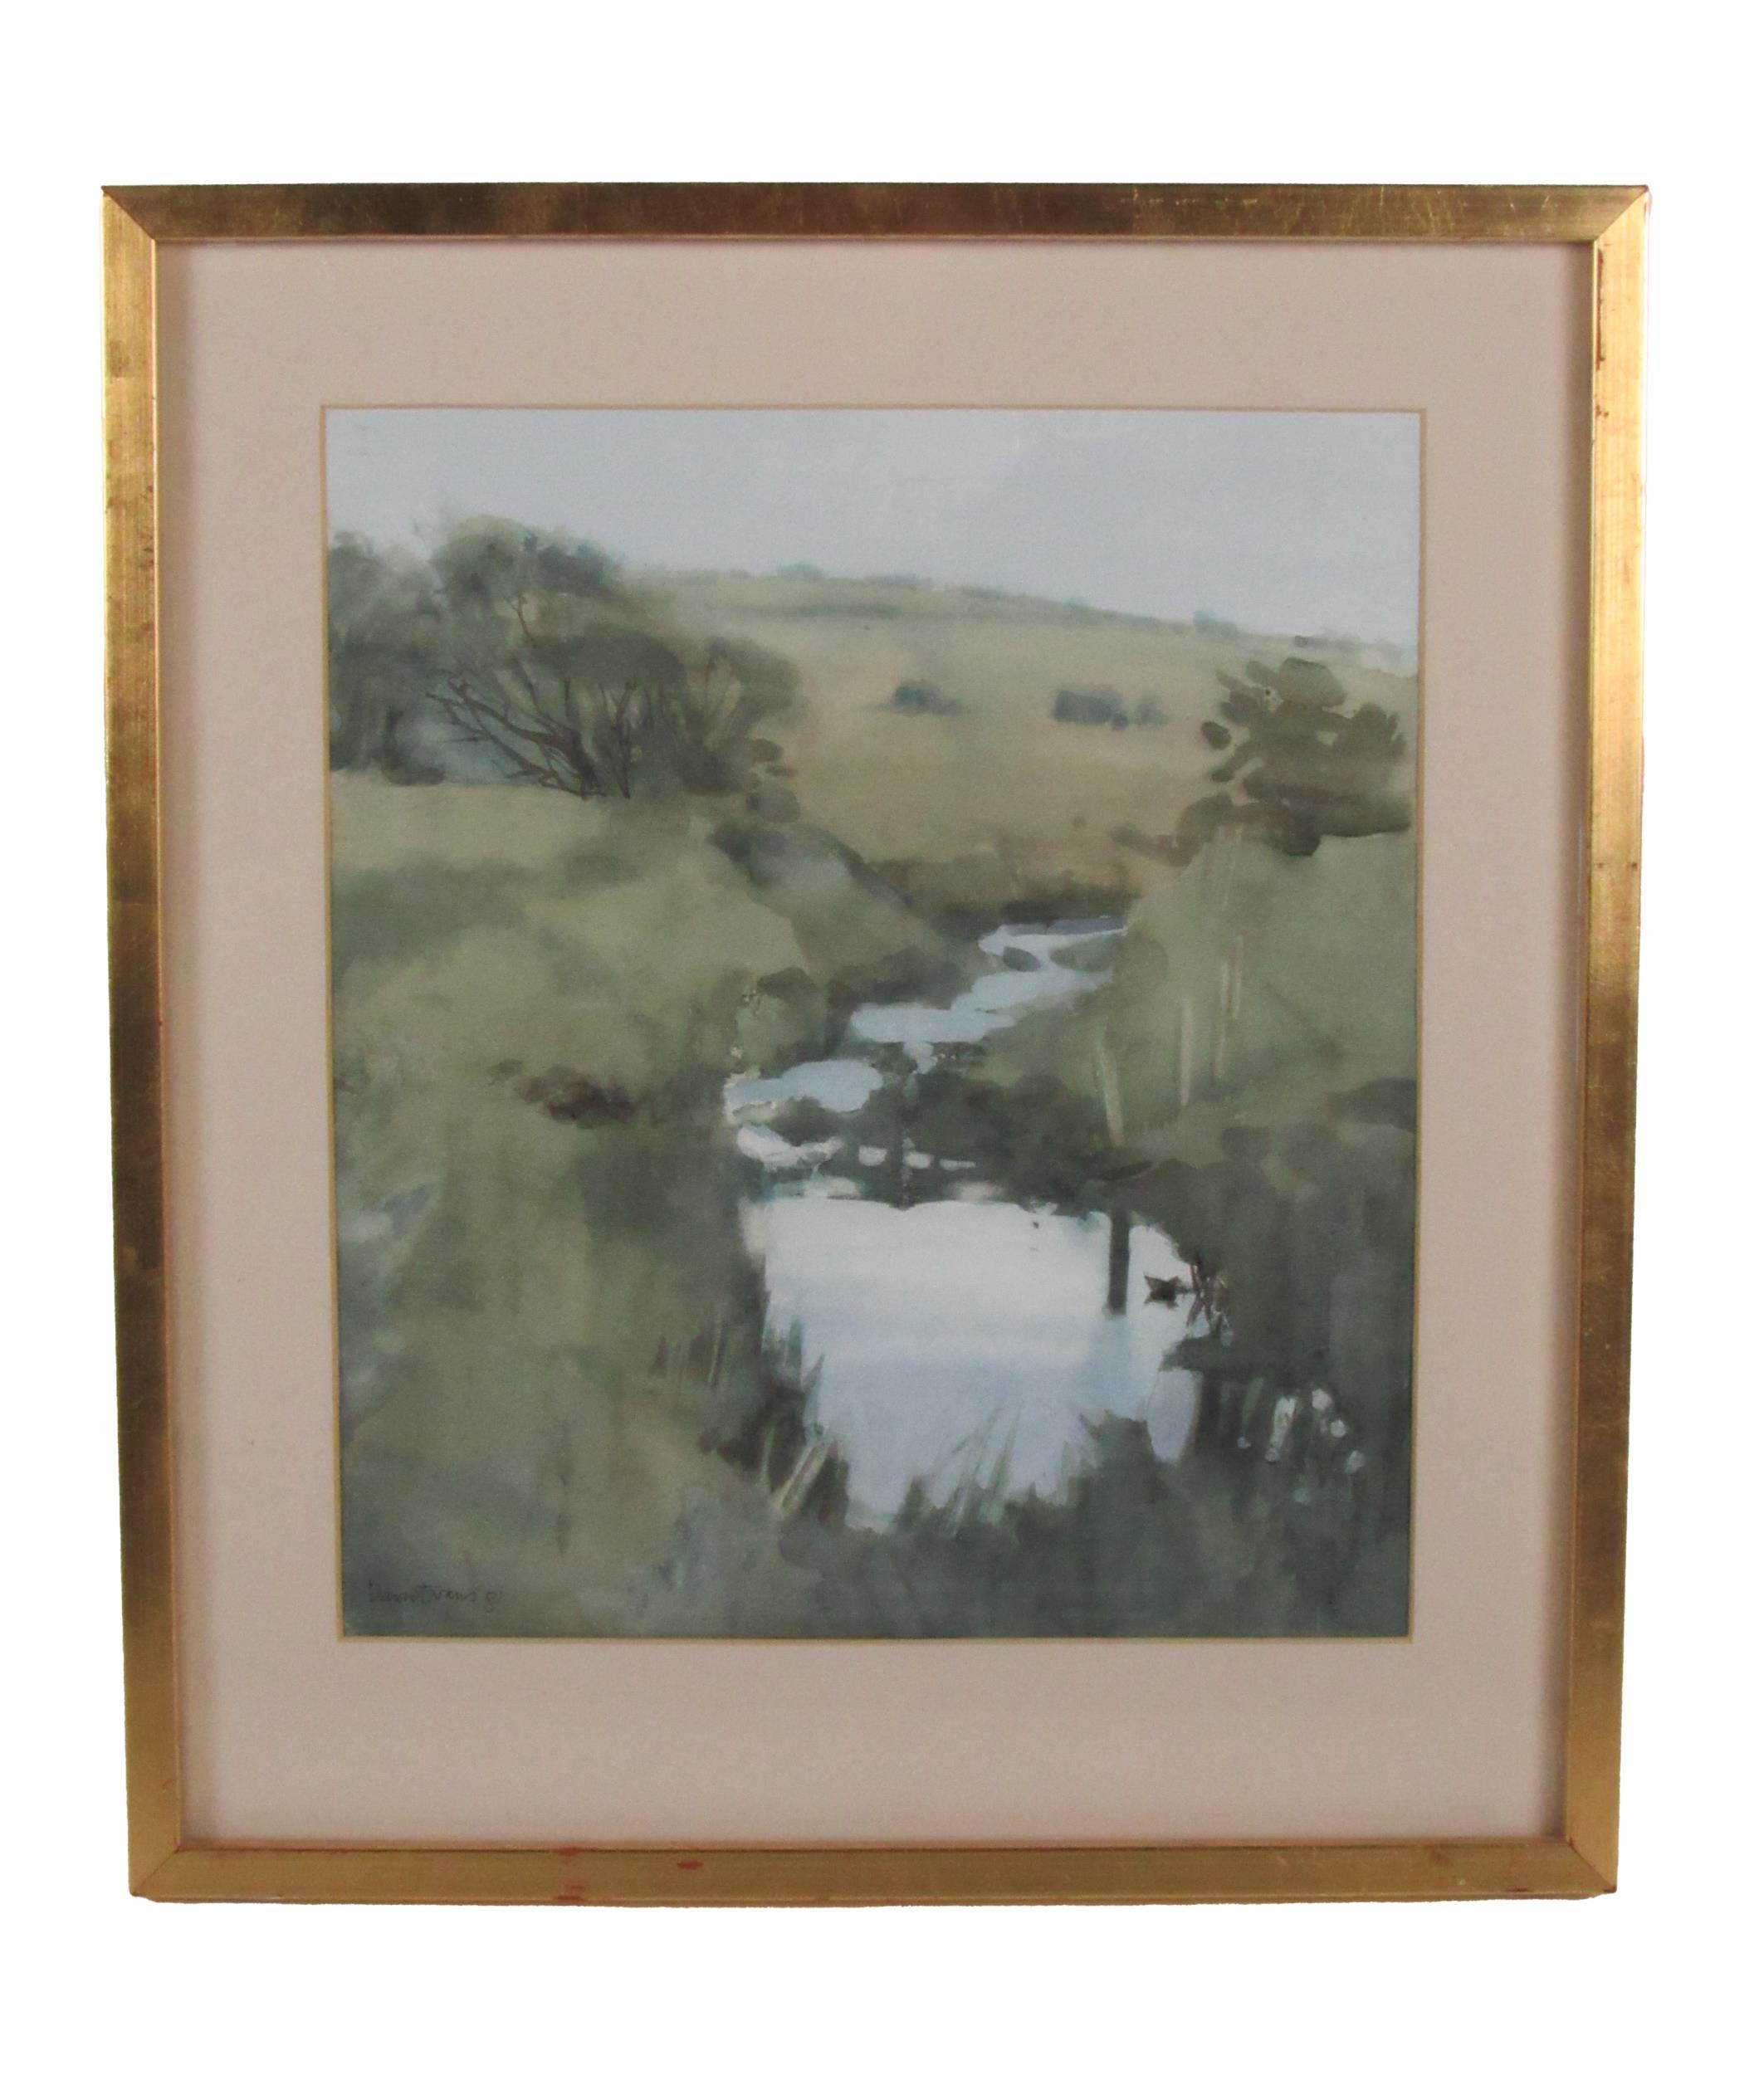 David Evans, ARCA, RSA, RSW (1942-2020) "Mountain Pond," watercolour, approx. 36cms x 31cms (14" x